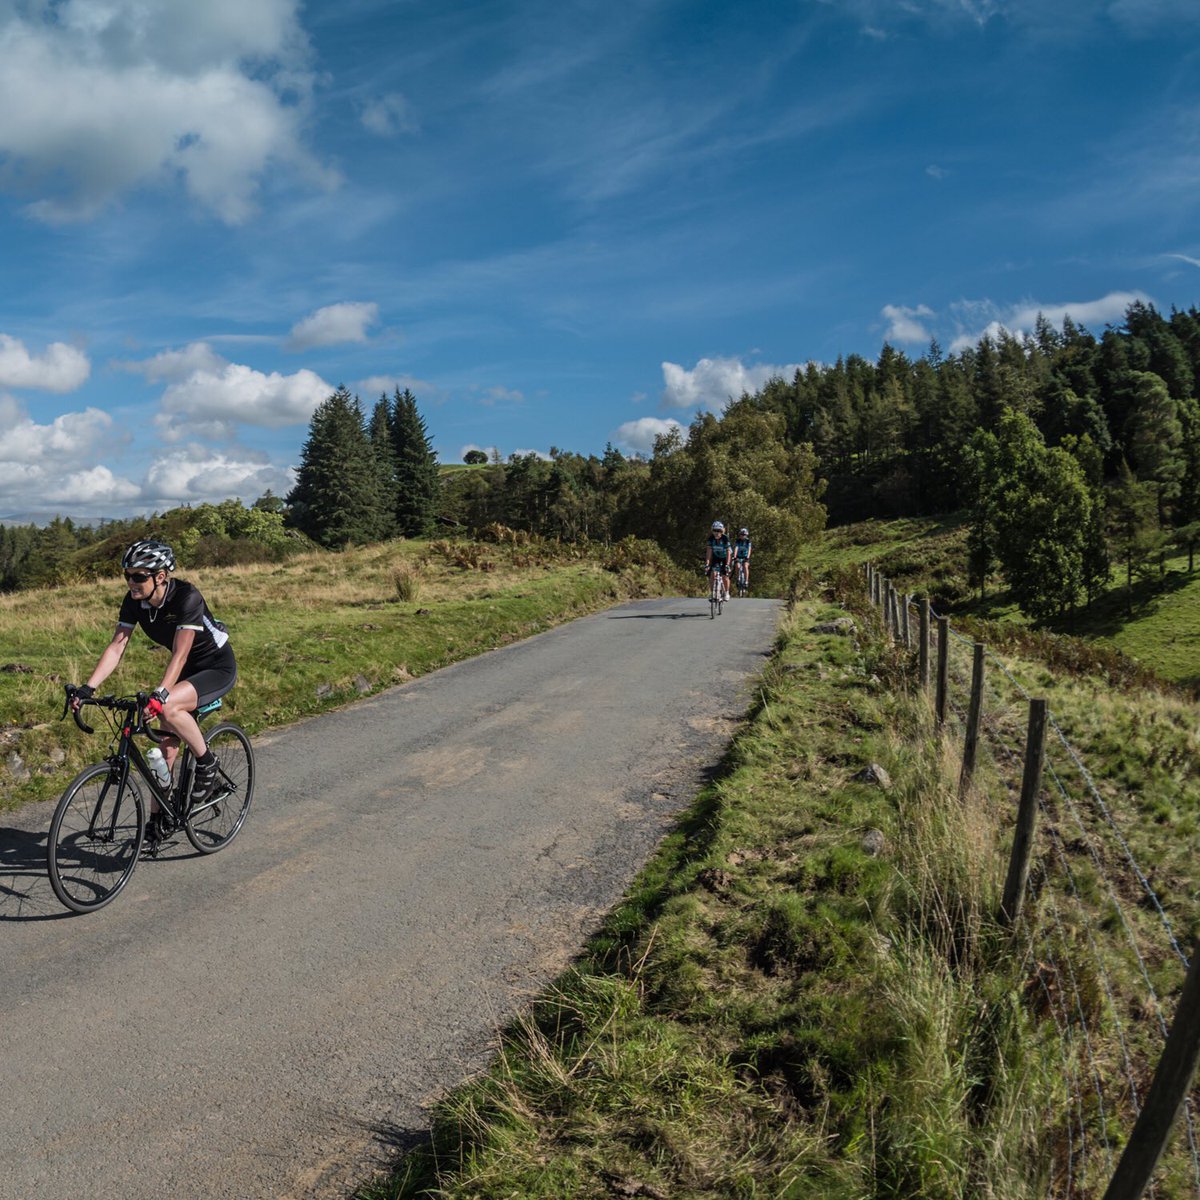 Tarn Hows, Lake District.
#cycling #tarnhows #lakedistrict #cumbria #swipeleft #cyclingphotos #cyclingshots #cyclinglife